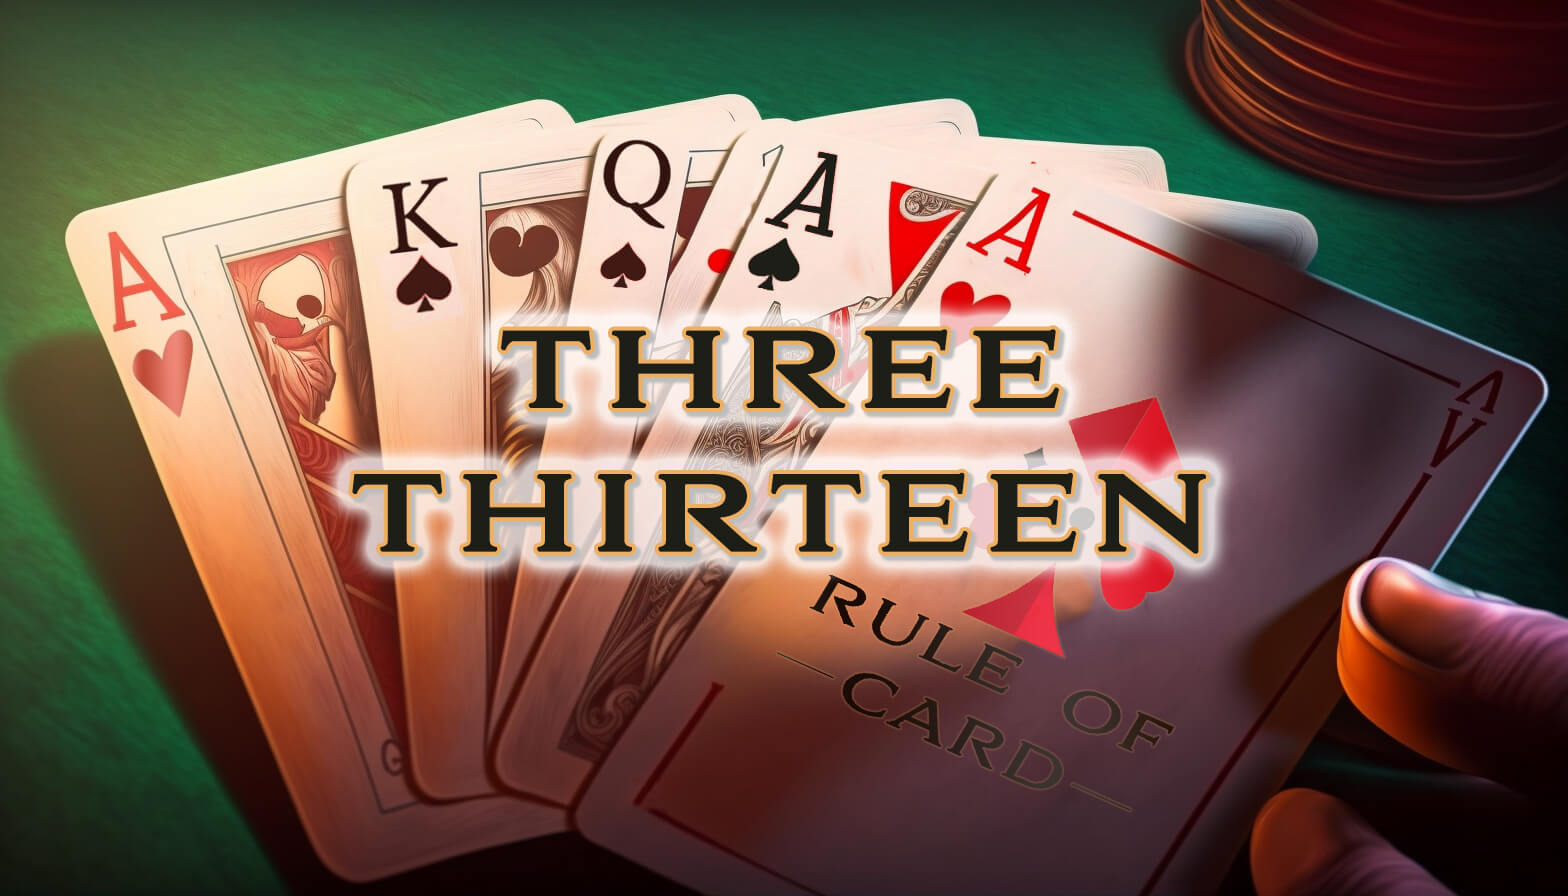 Playing the card game Three Thirteen